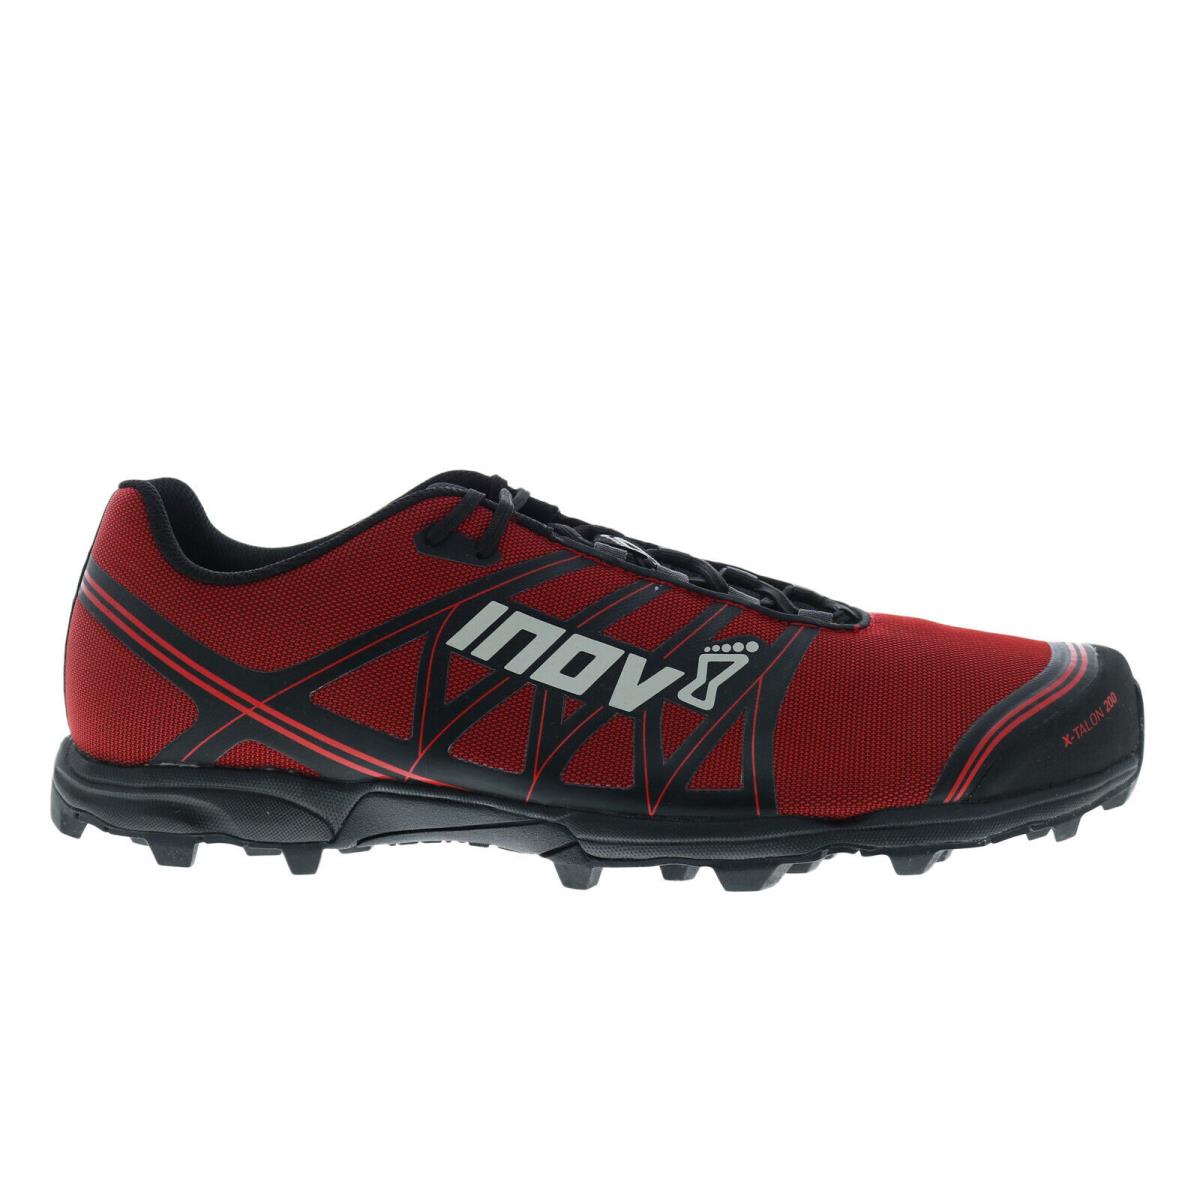 Inov-8 X-talon 200 000149-RDBK Mens Red Synthetic Athletic Hiking Shoes